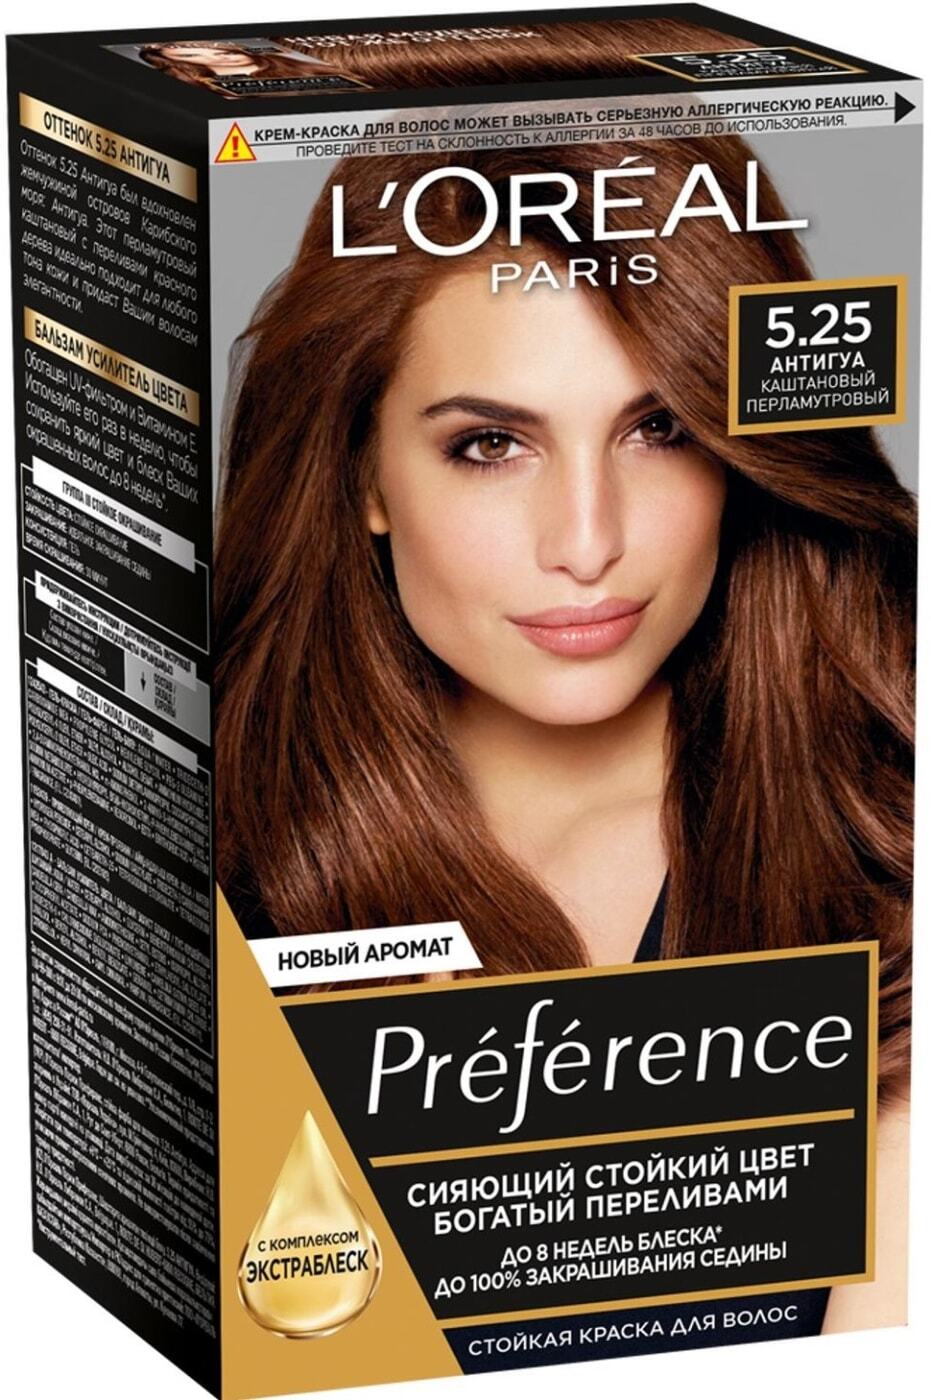 L'Oreal Paris краска для волос preference, 5.25, Антигуа, 174мл